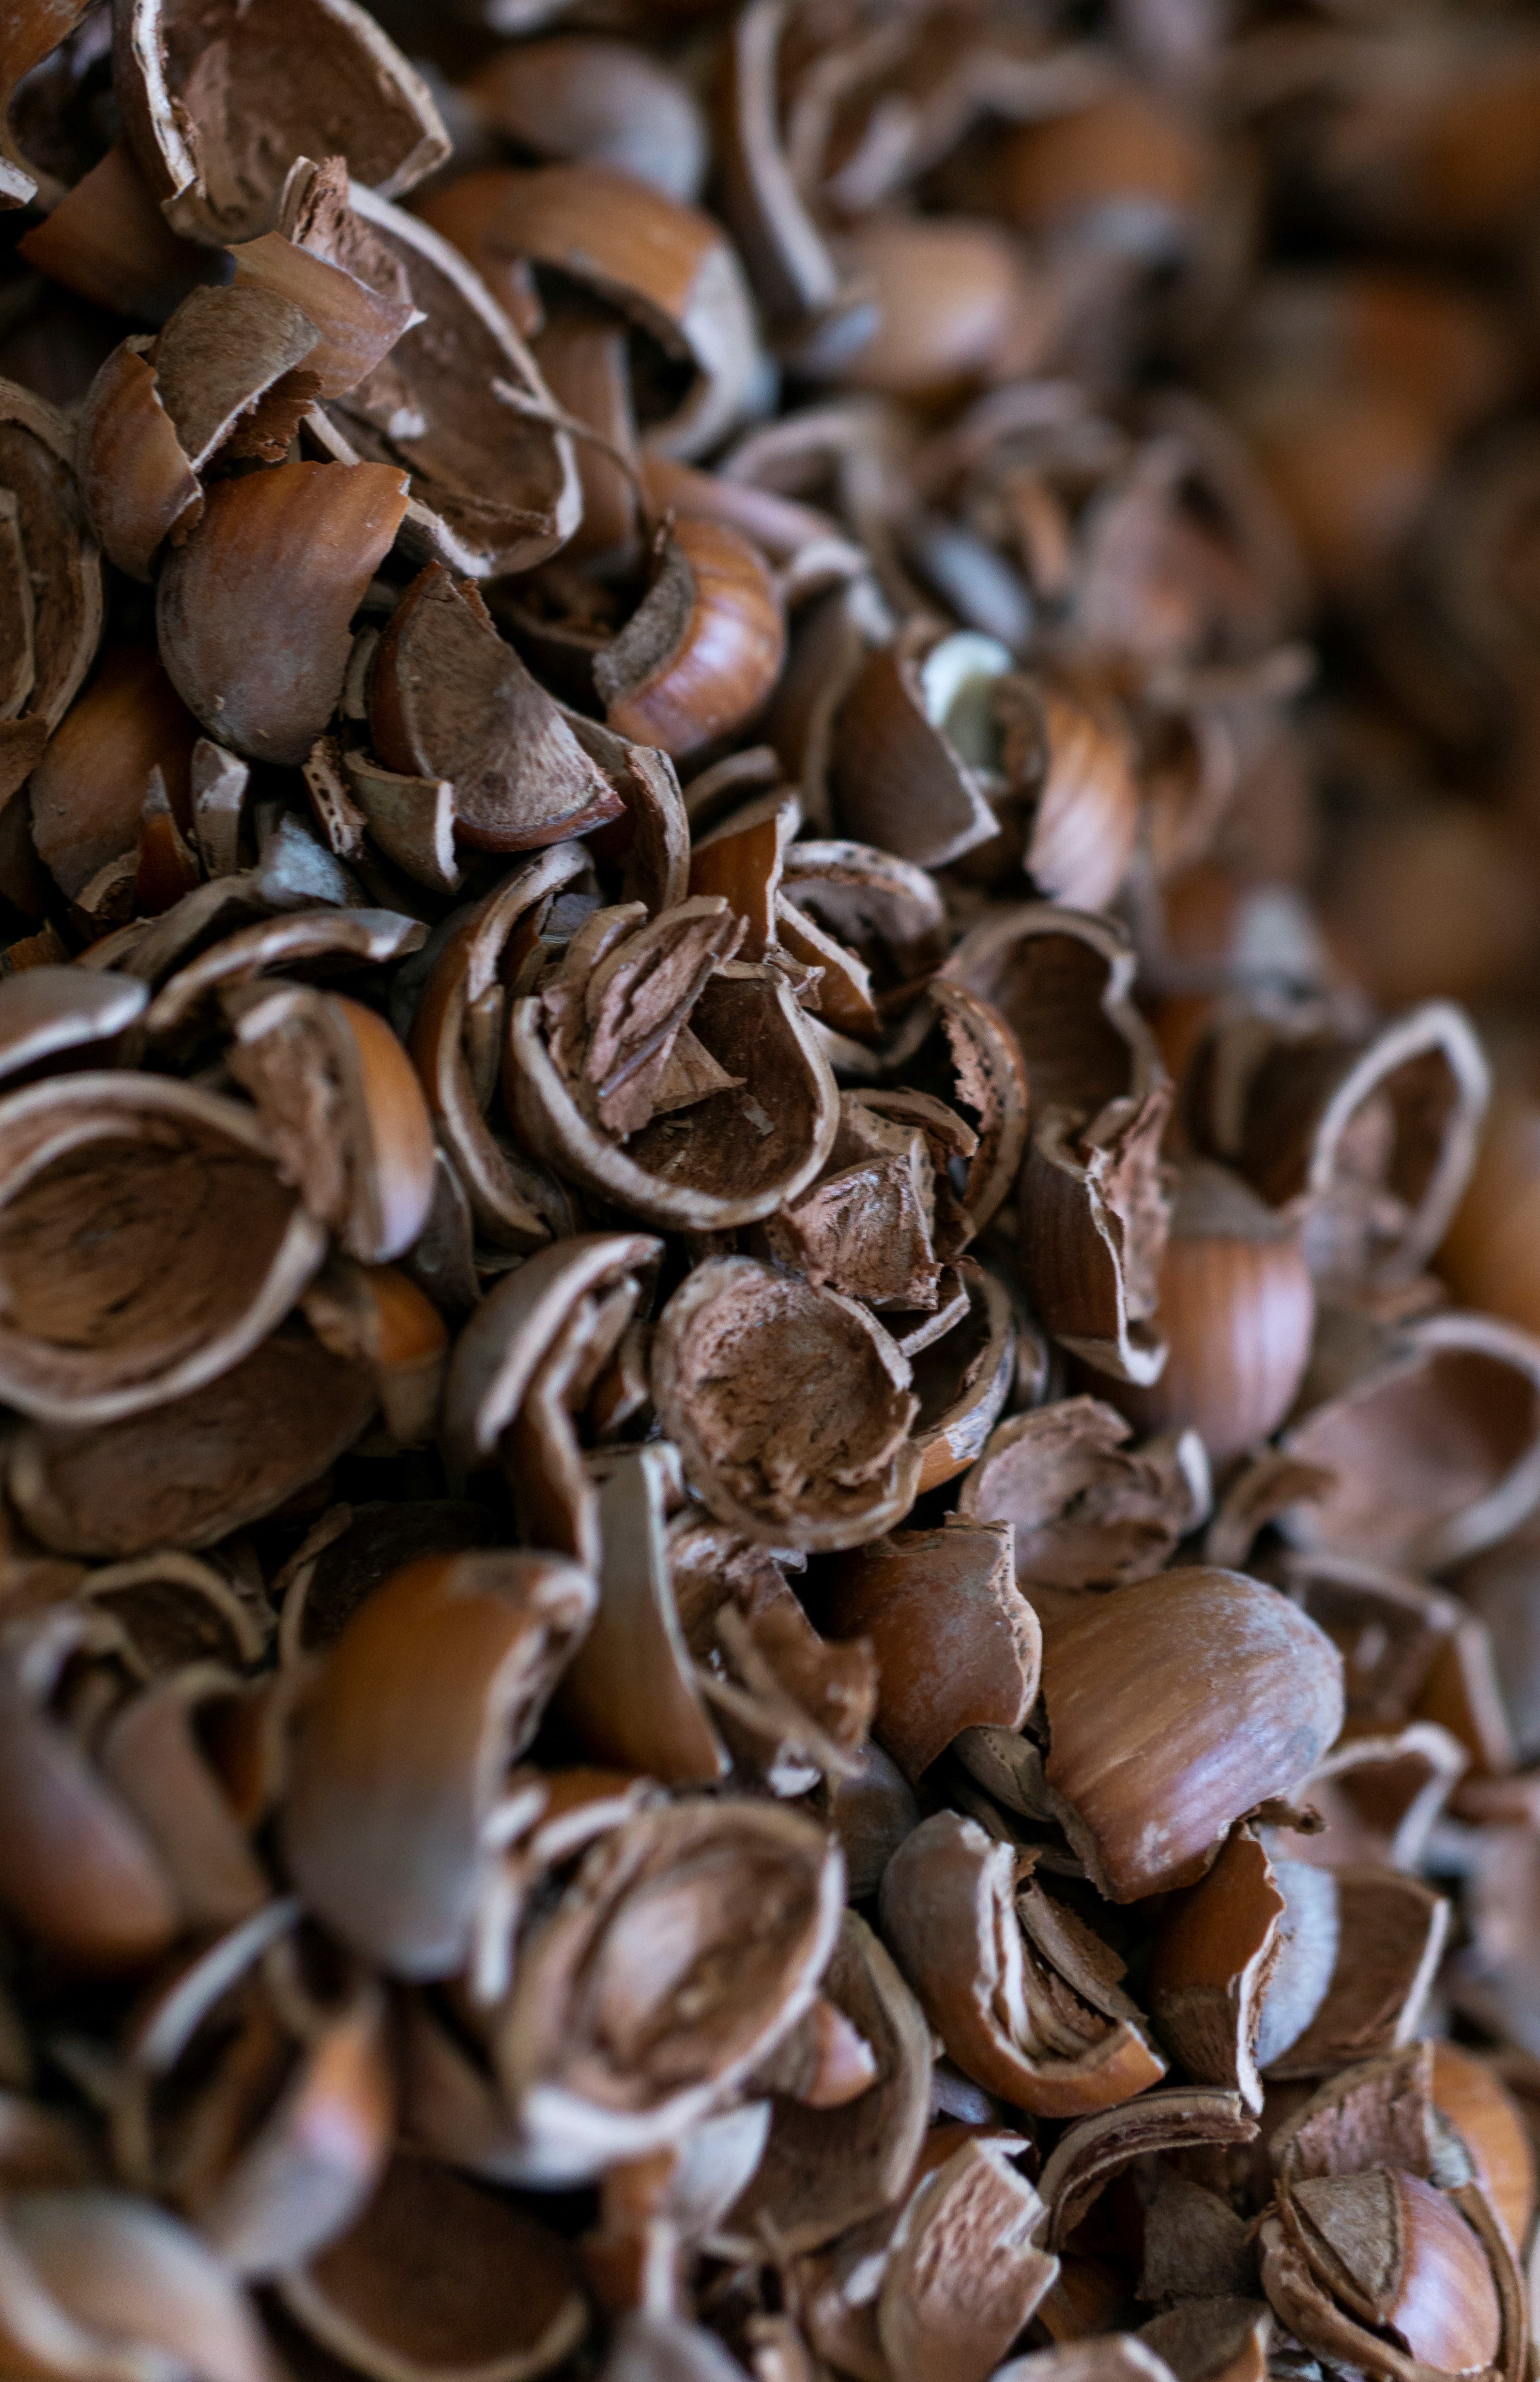 Hazelnut shells untreated, Germany or Croatia